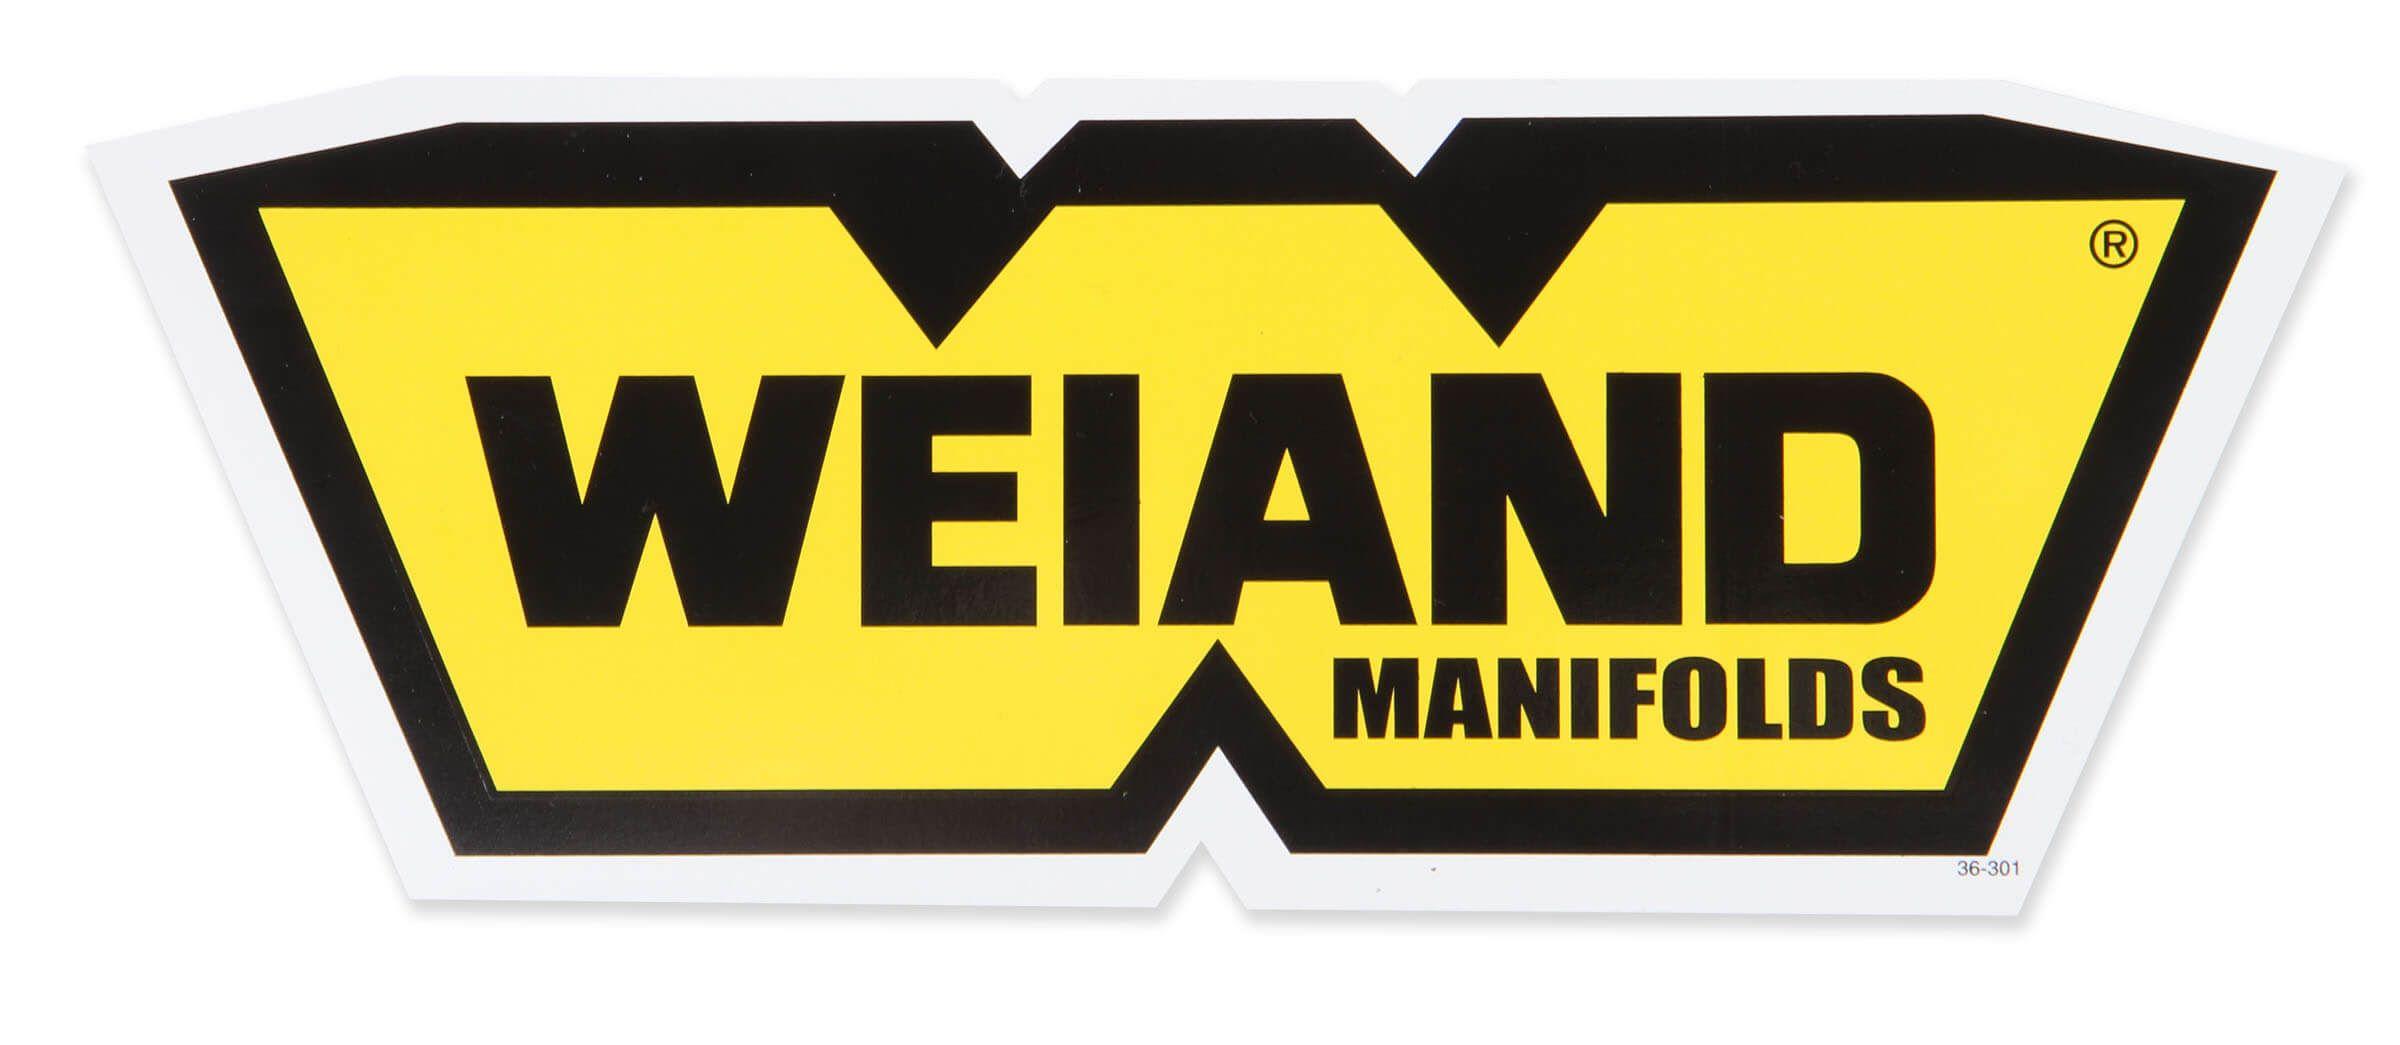 Weiand Logo - Weiand Manifolds Decal